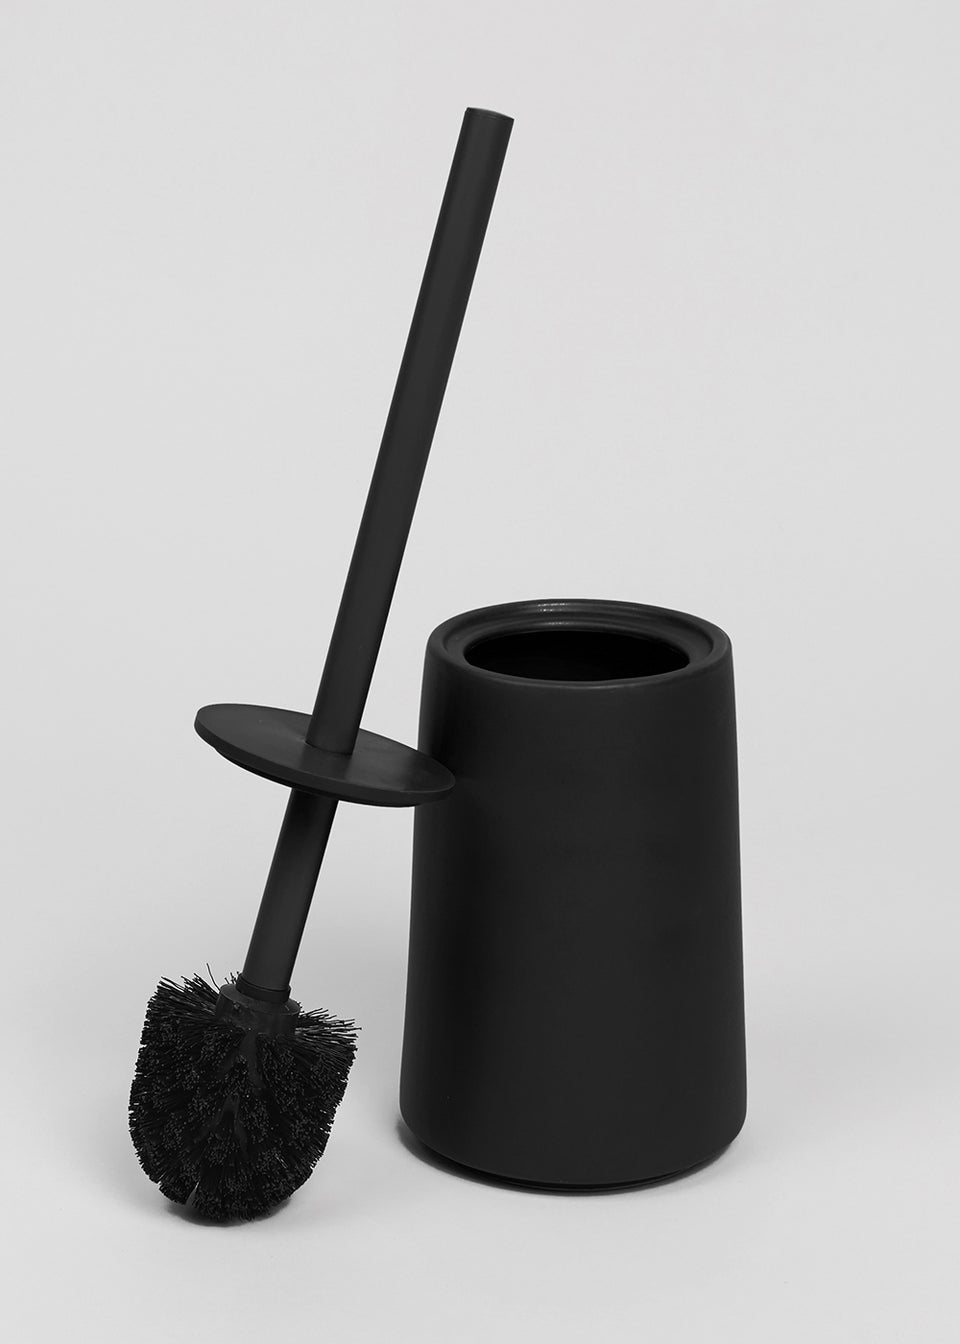 Chunky Ceramic Toilet Brush (40cm x 12cm)